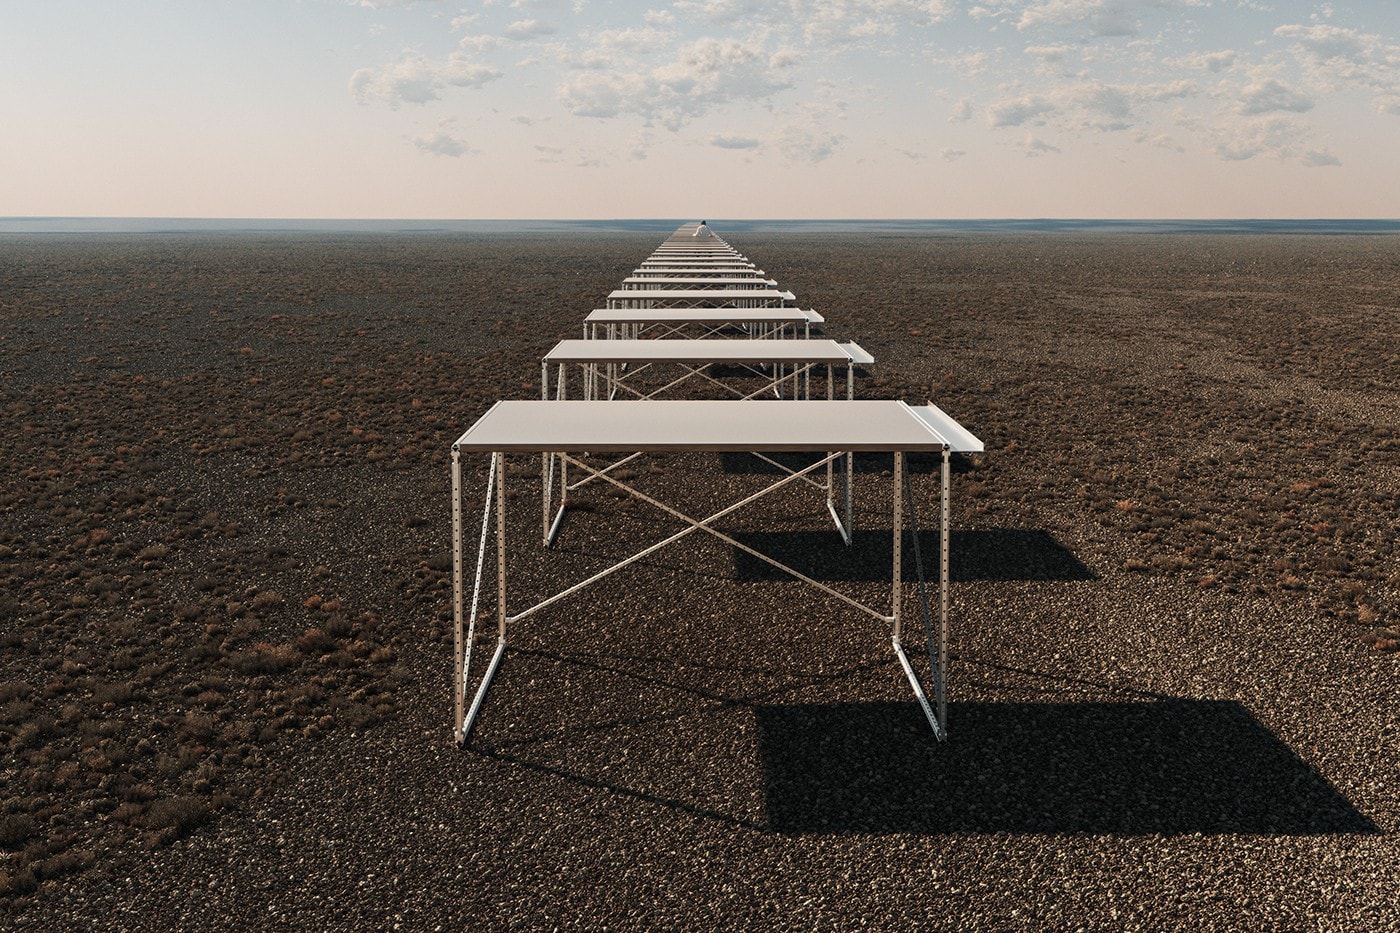 Teenage Engineering 推出模组化设计桌子「Field Desk」